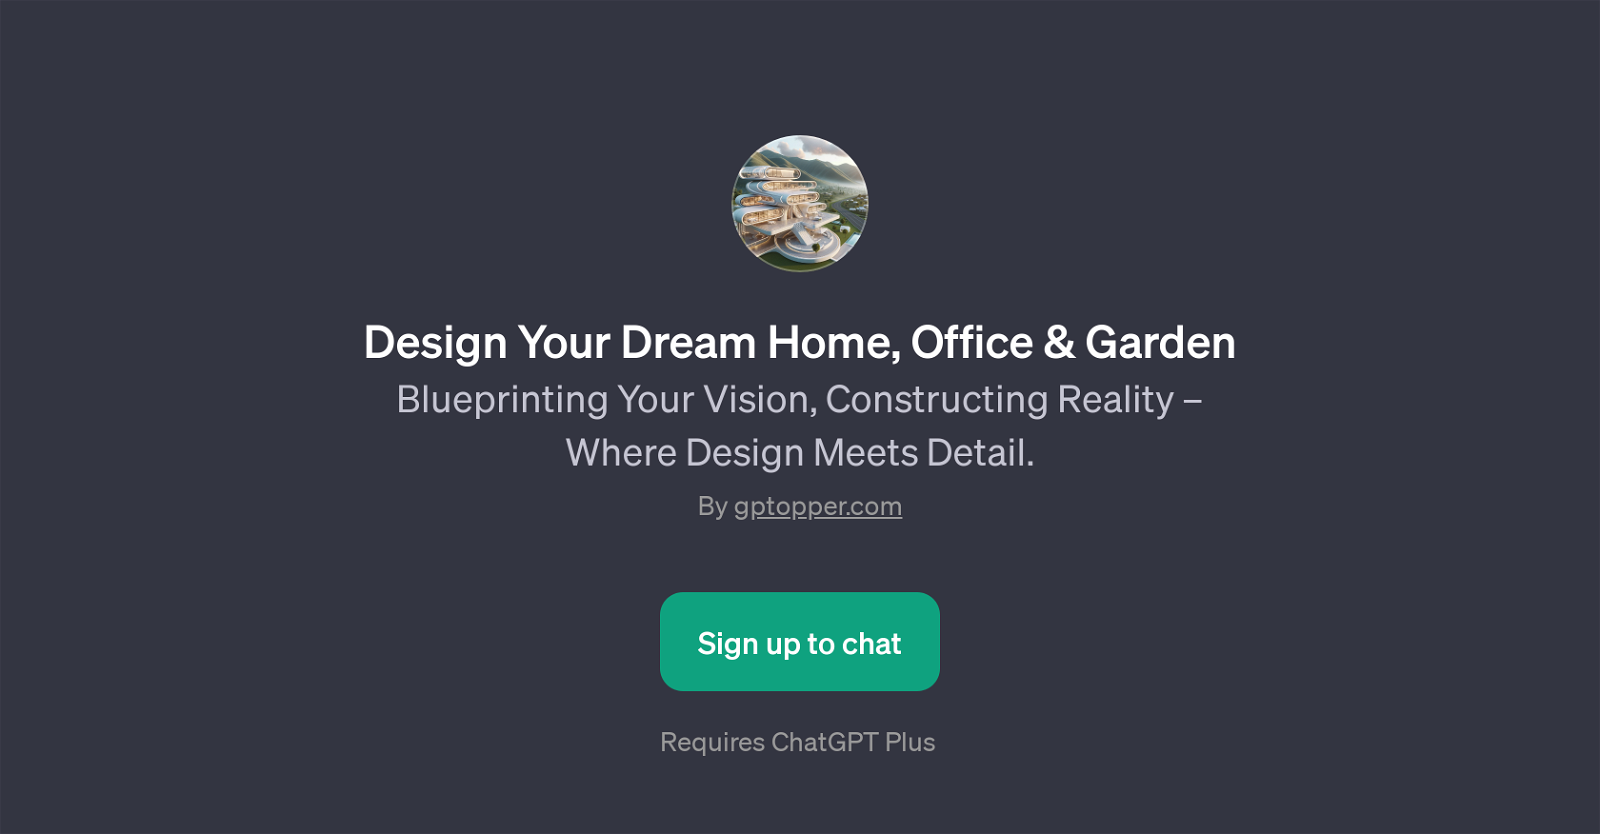 Design Your Dream Home, Office & Garden website